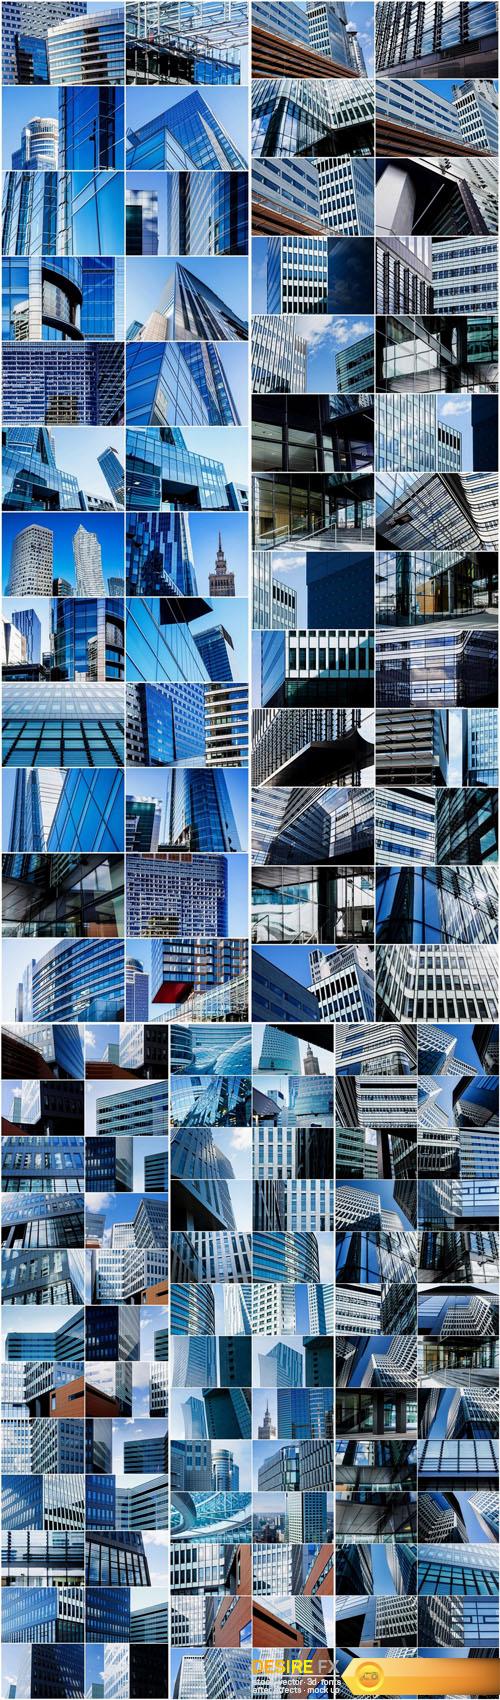 Modern Architecture, Skyscrapers, Metal & Glass - 125 HQ JPEG Photo